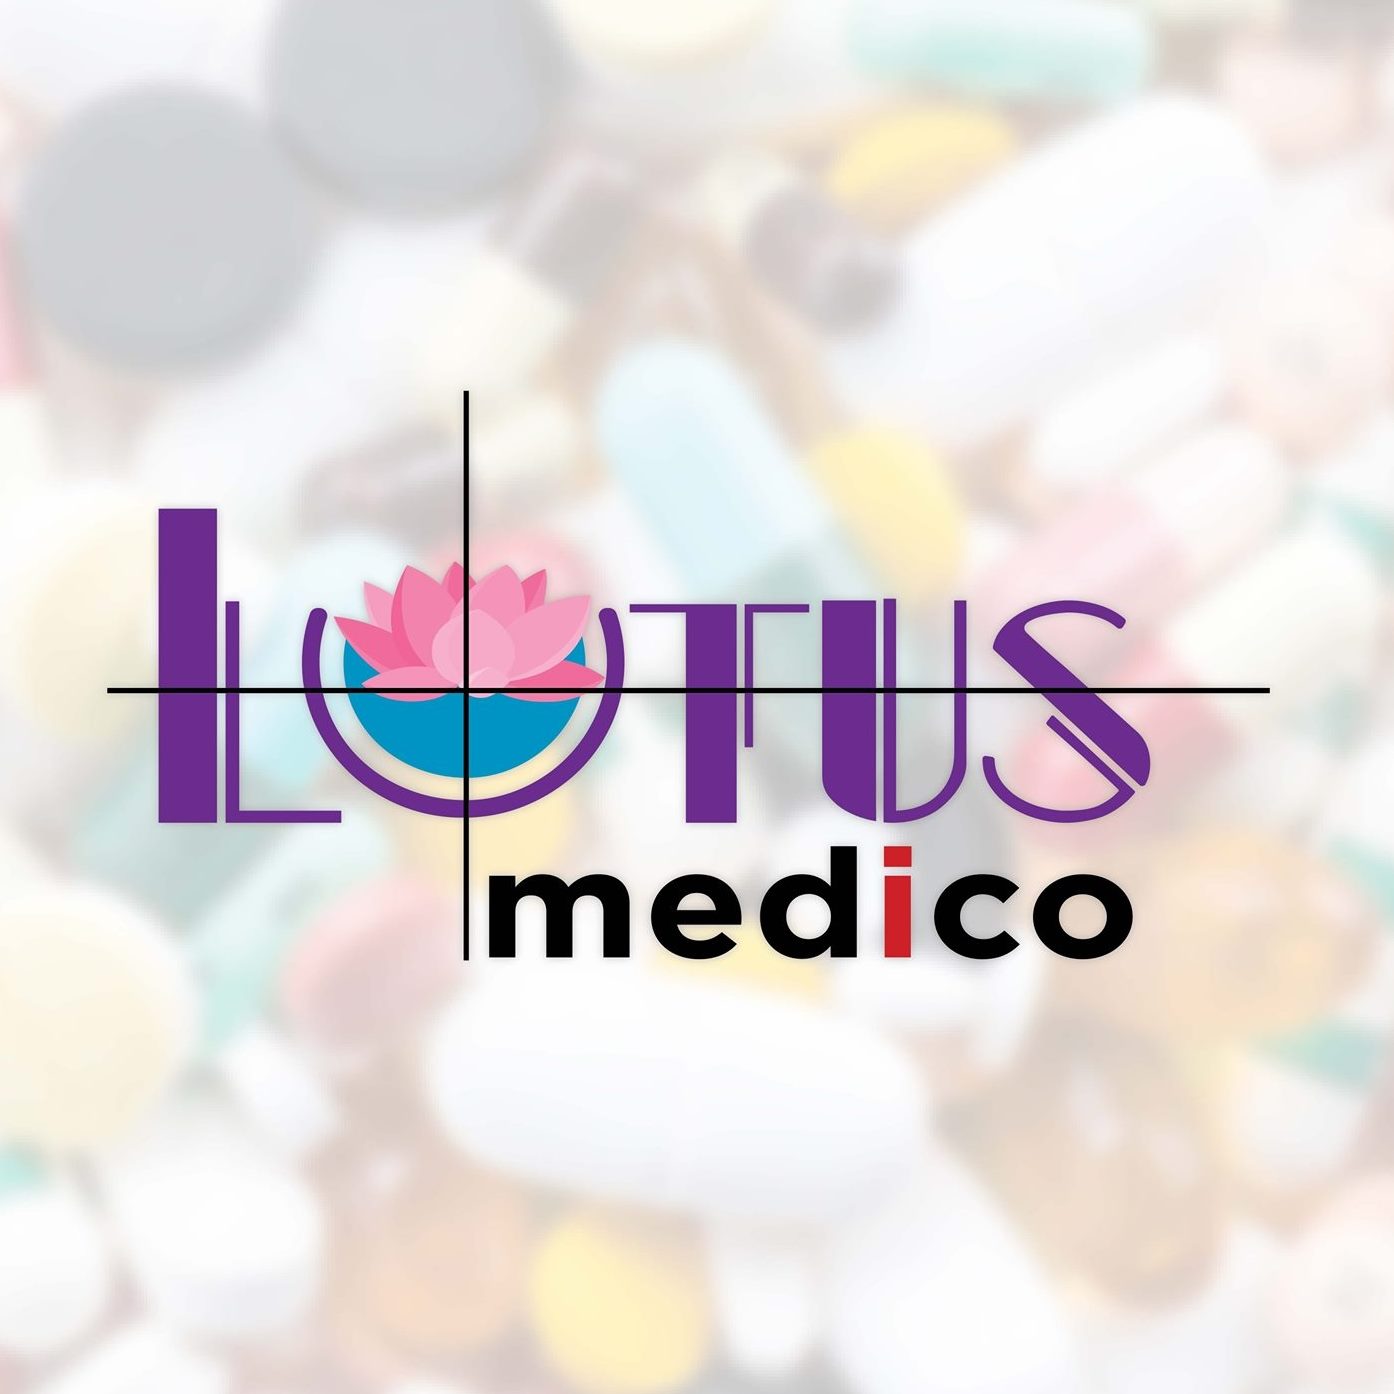 Lotus Medico